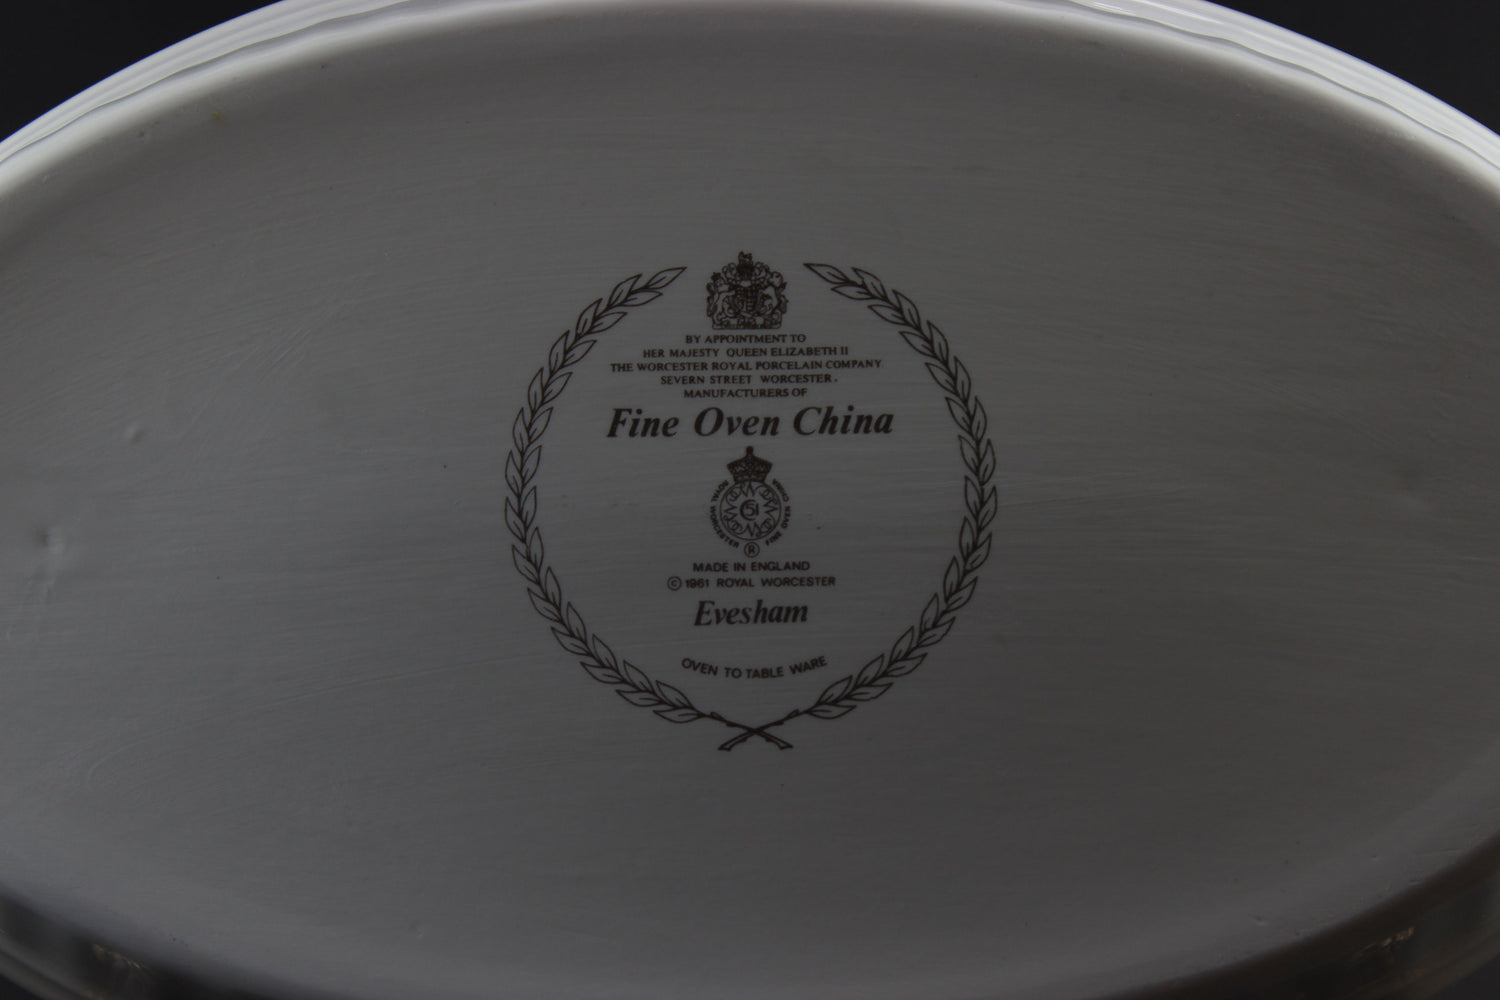 Evesham Gold, Royal Worcester, Oval Casserole Dish